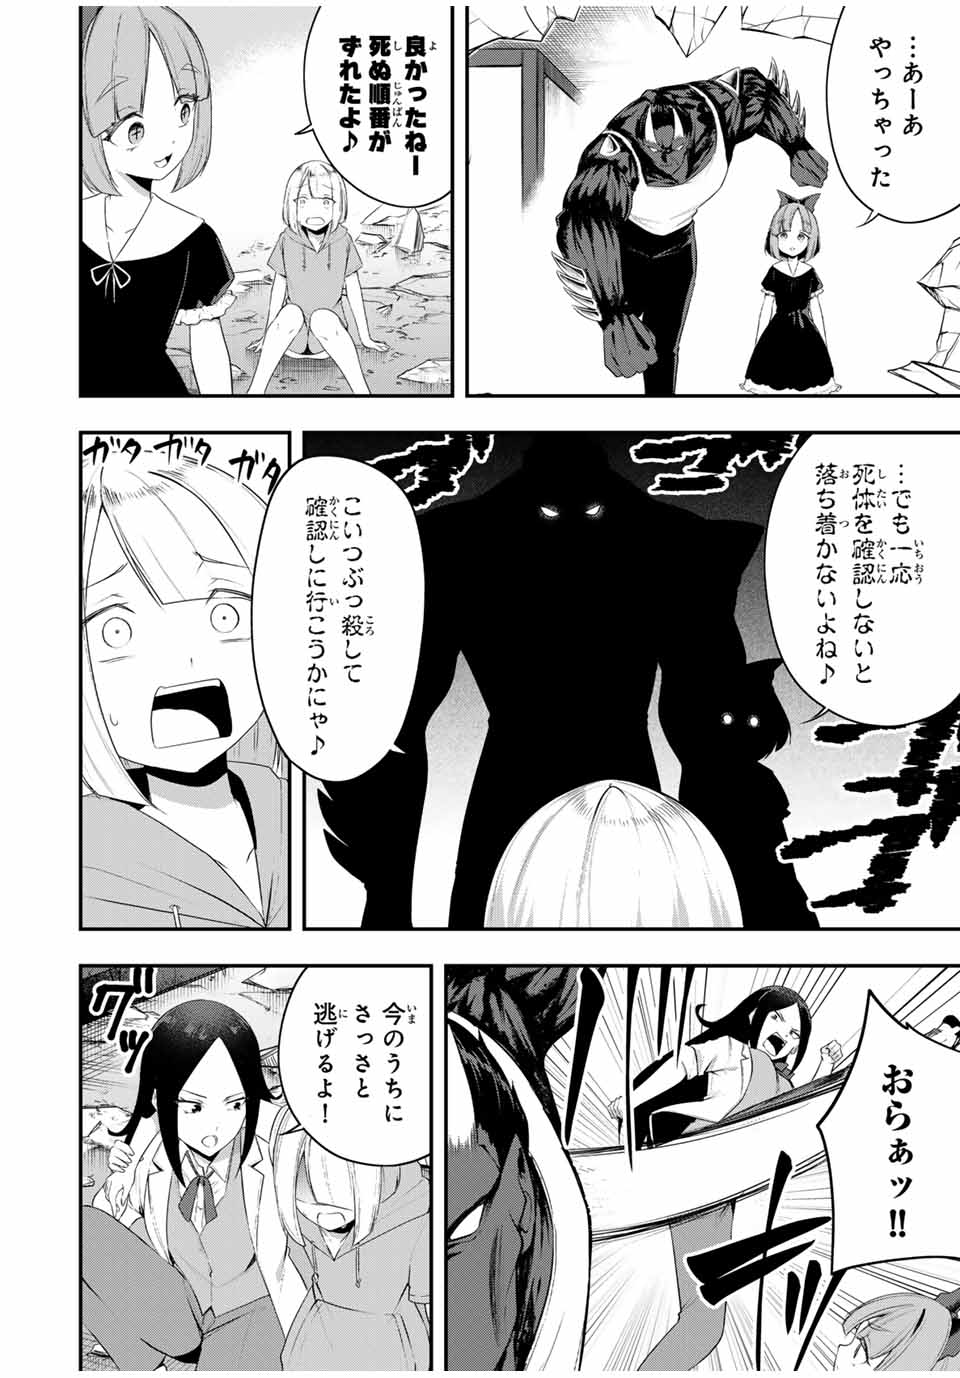 Heroine wa xx Okasegitai - Chapter 14 - Page 18